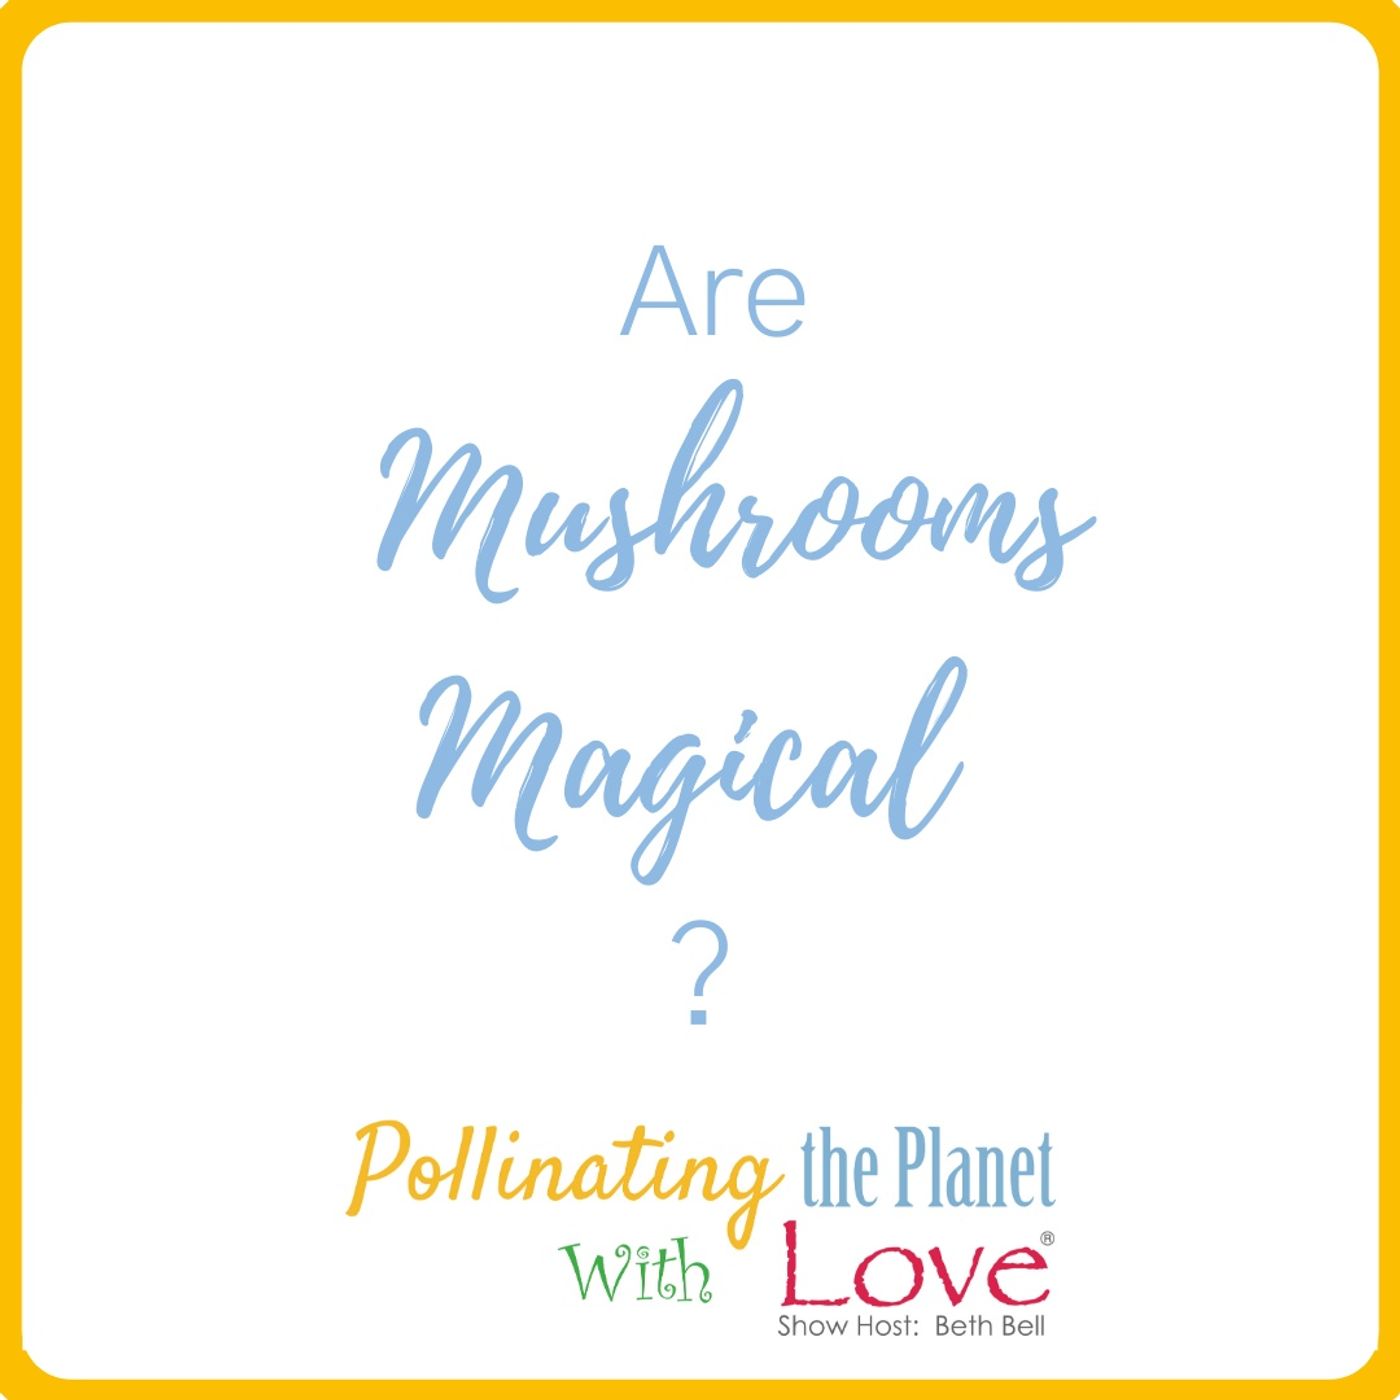 Are Mushrooms Magical?  Guest Louie Schwartzberg